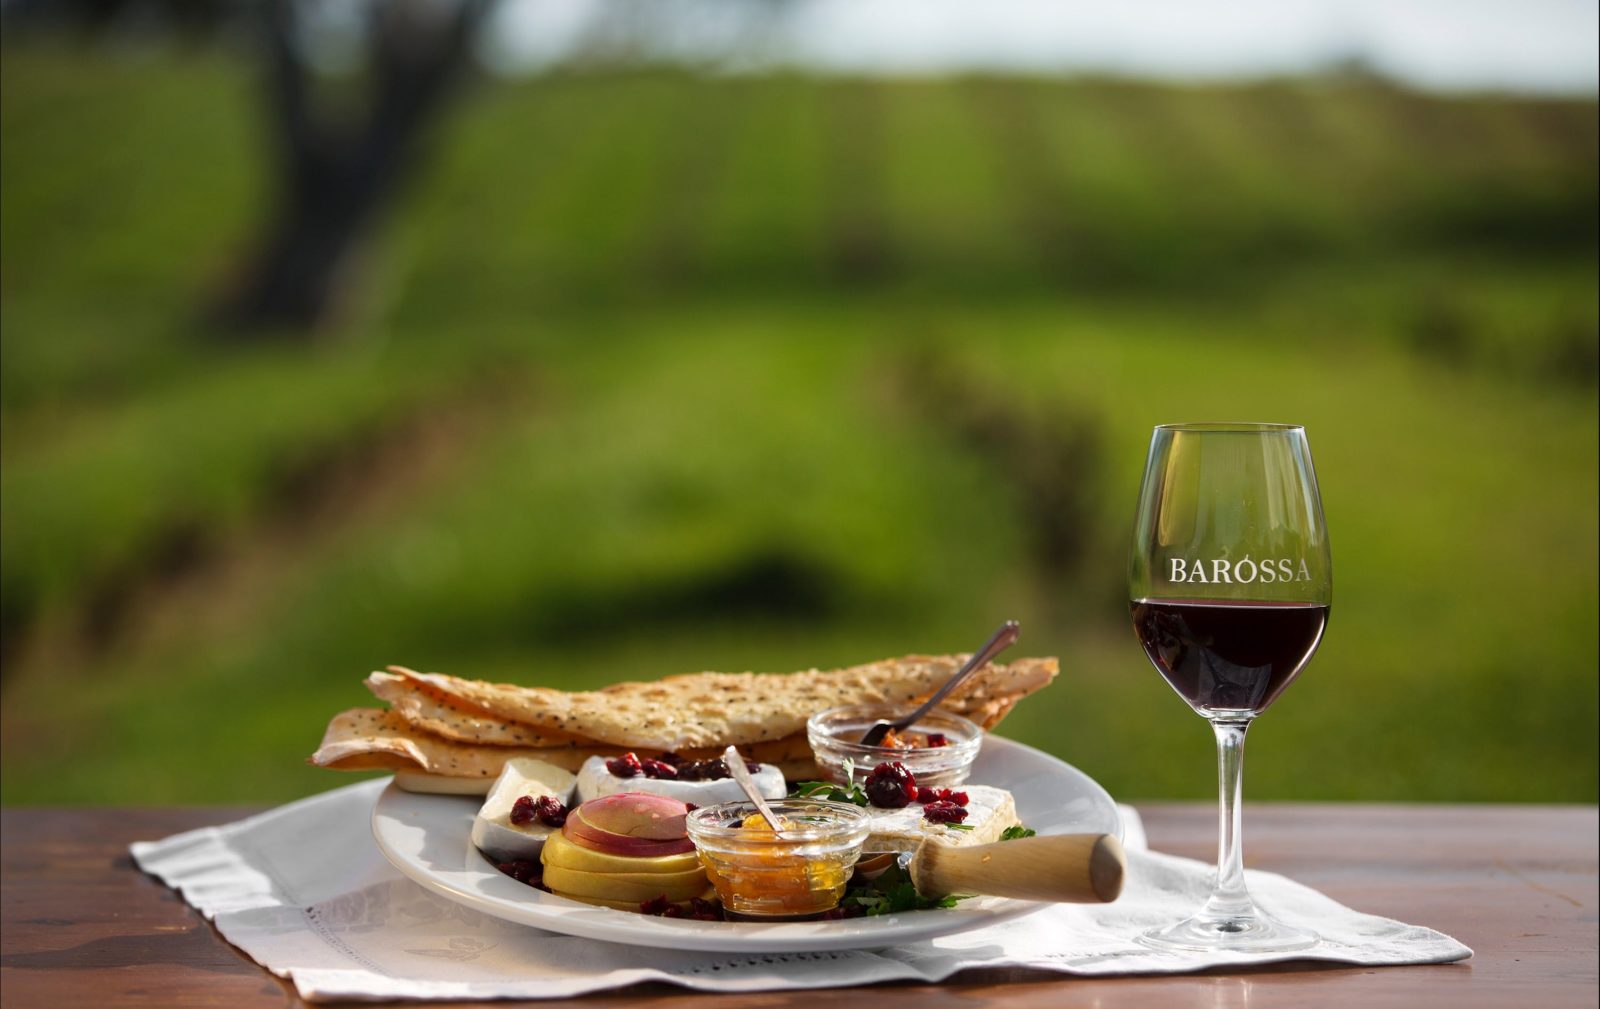 Barossa wine and food